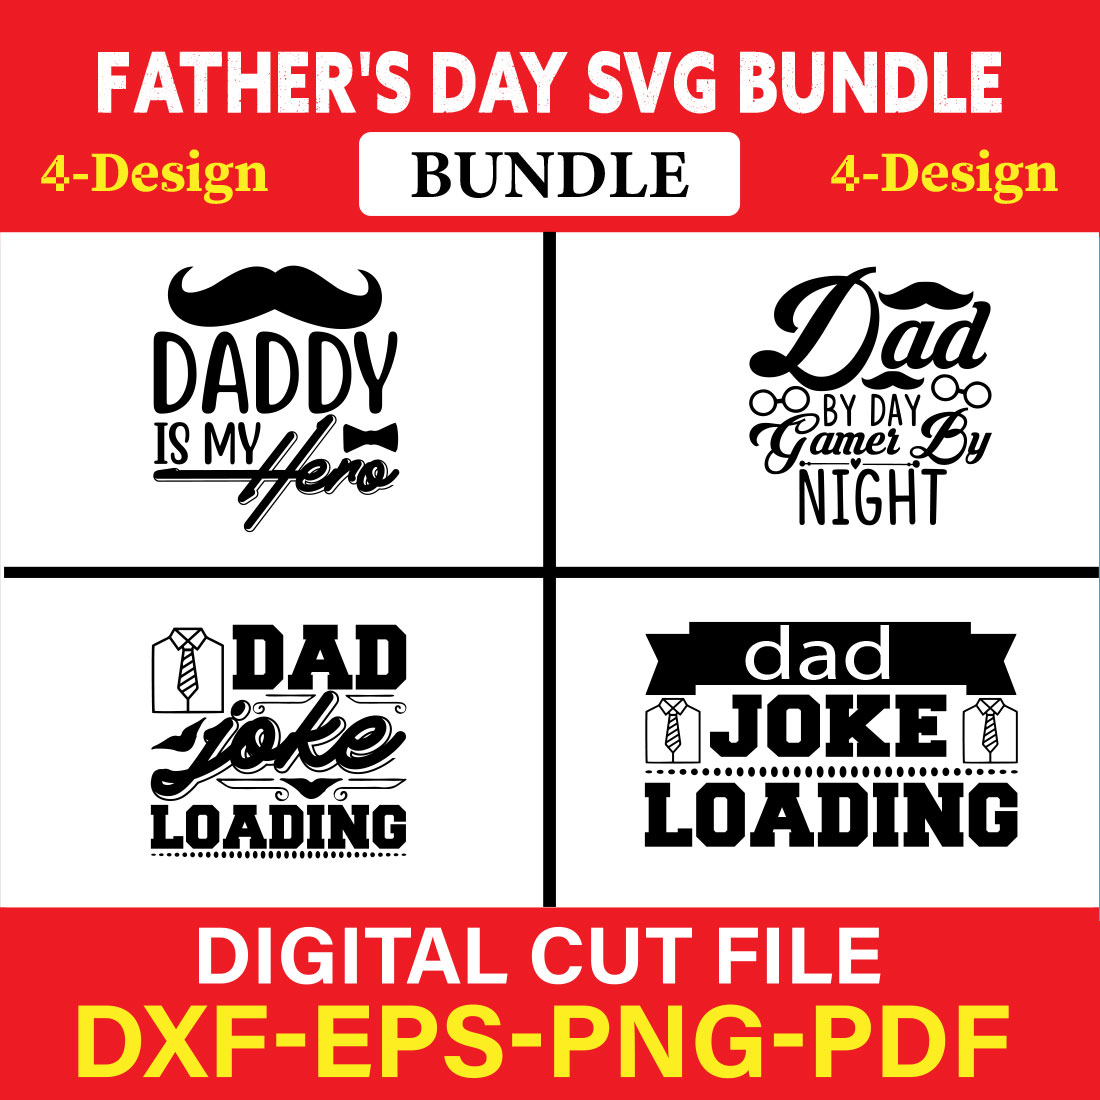 Father's Day SVG T-shirt Design Bundle Vol-1 cover image.